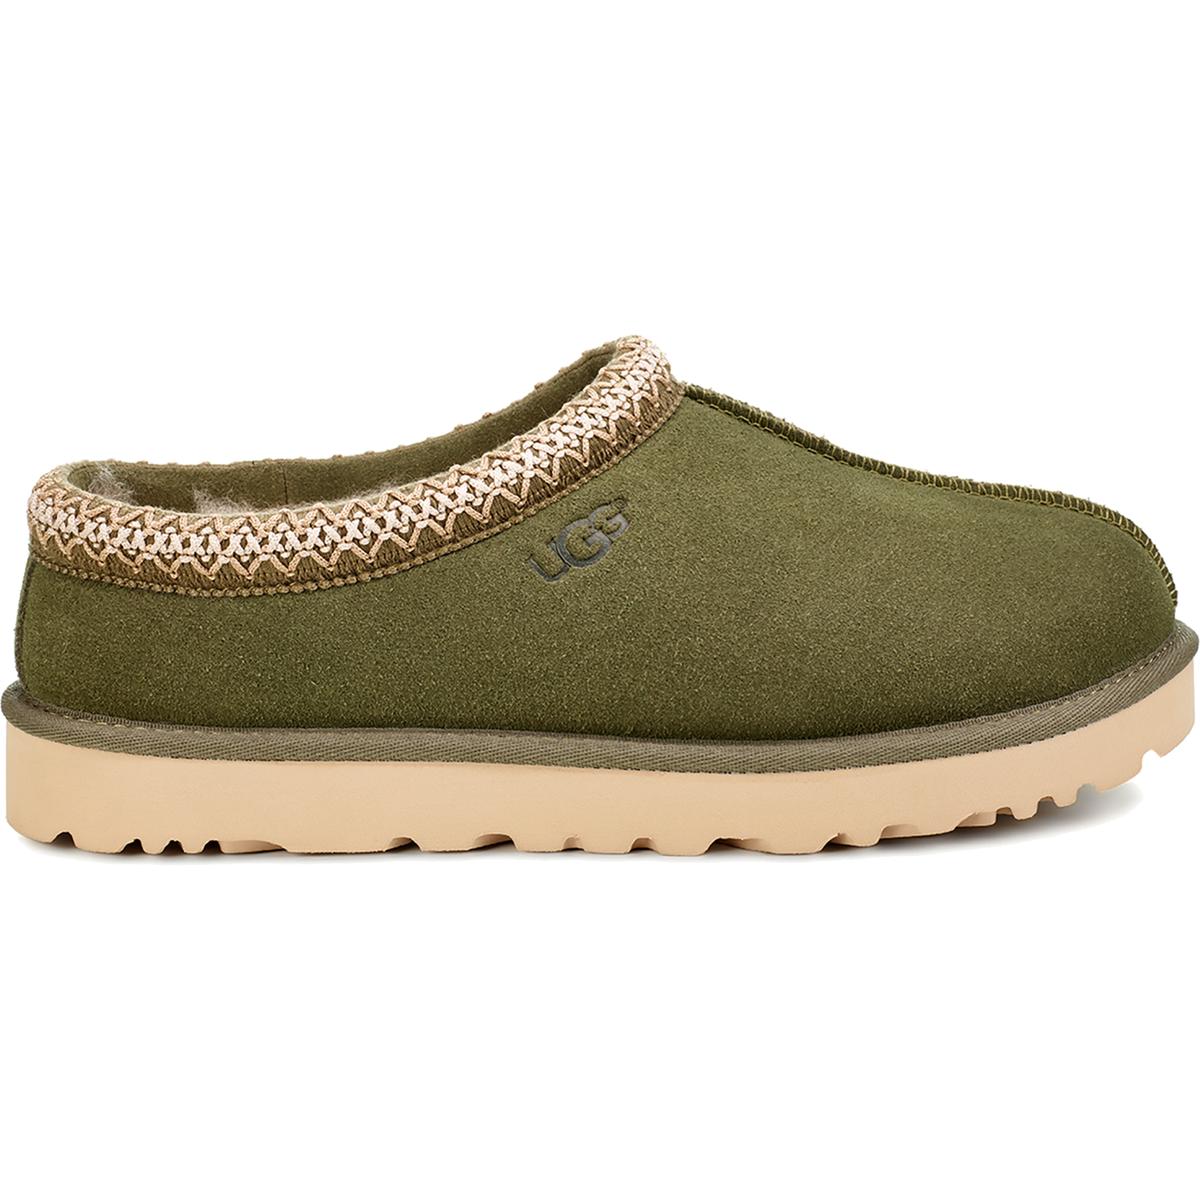 Ugg Mens Tasman Green Suede Sheepskin Slippers Shoes 10 Medium (D) BHFO ...